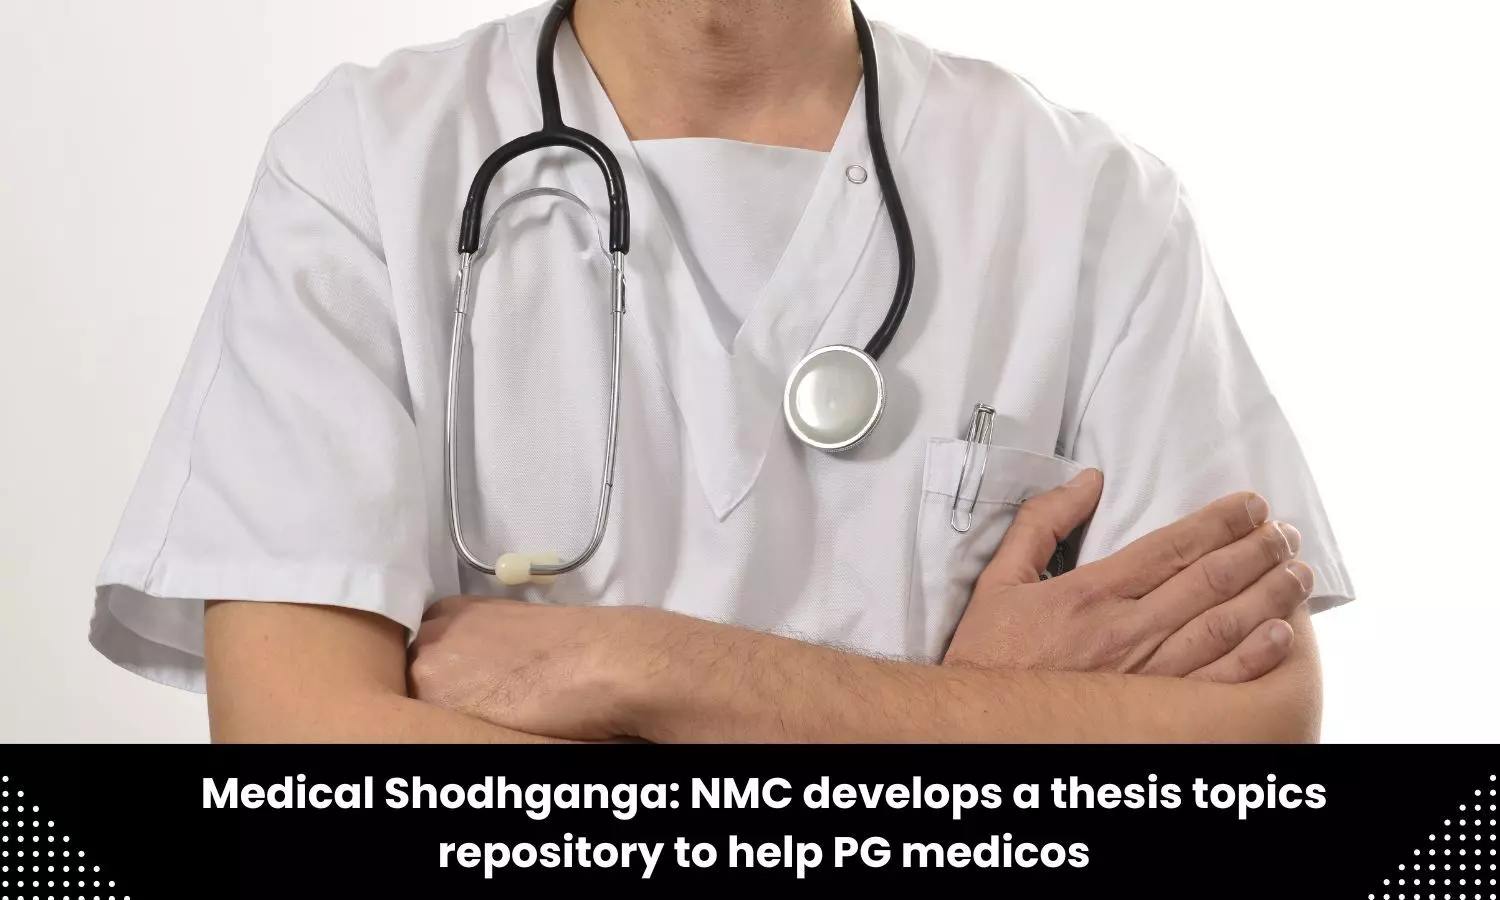 NMC develops thesis topics repository for PG medicos